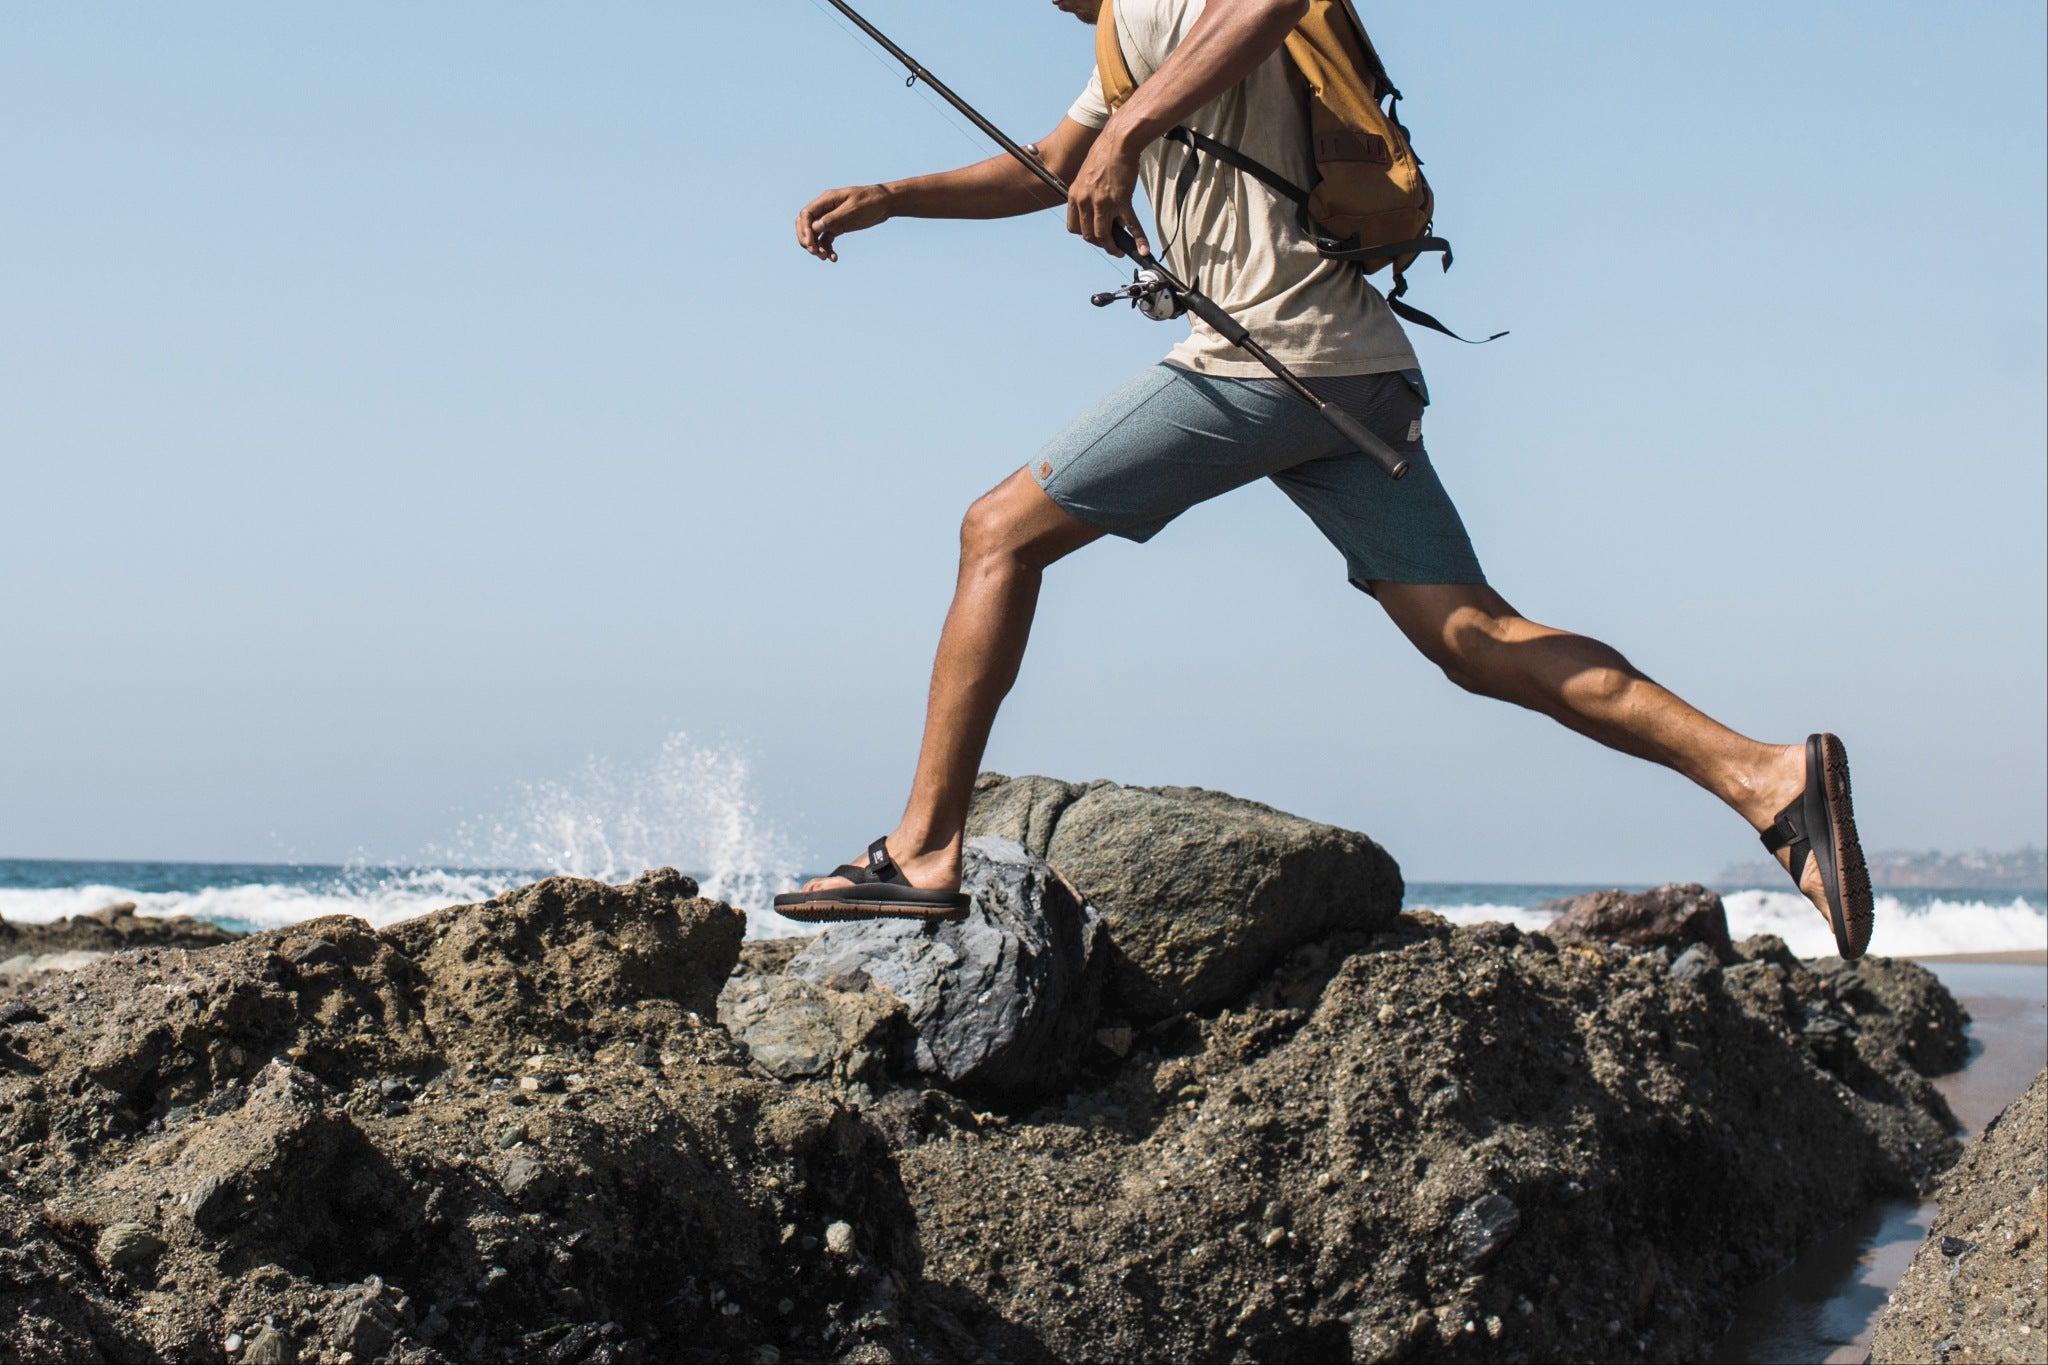 Man in sandal jumping across rocks on beach